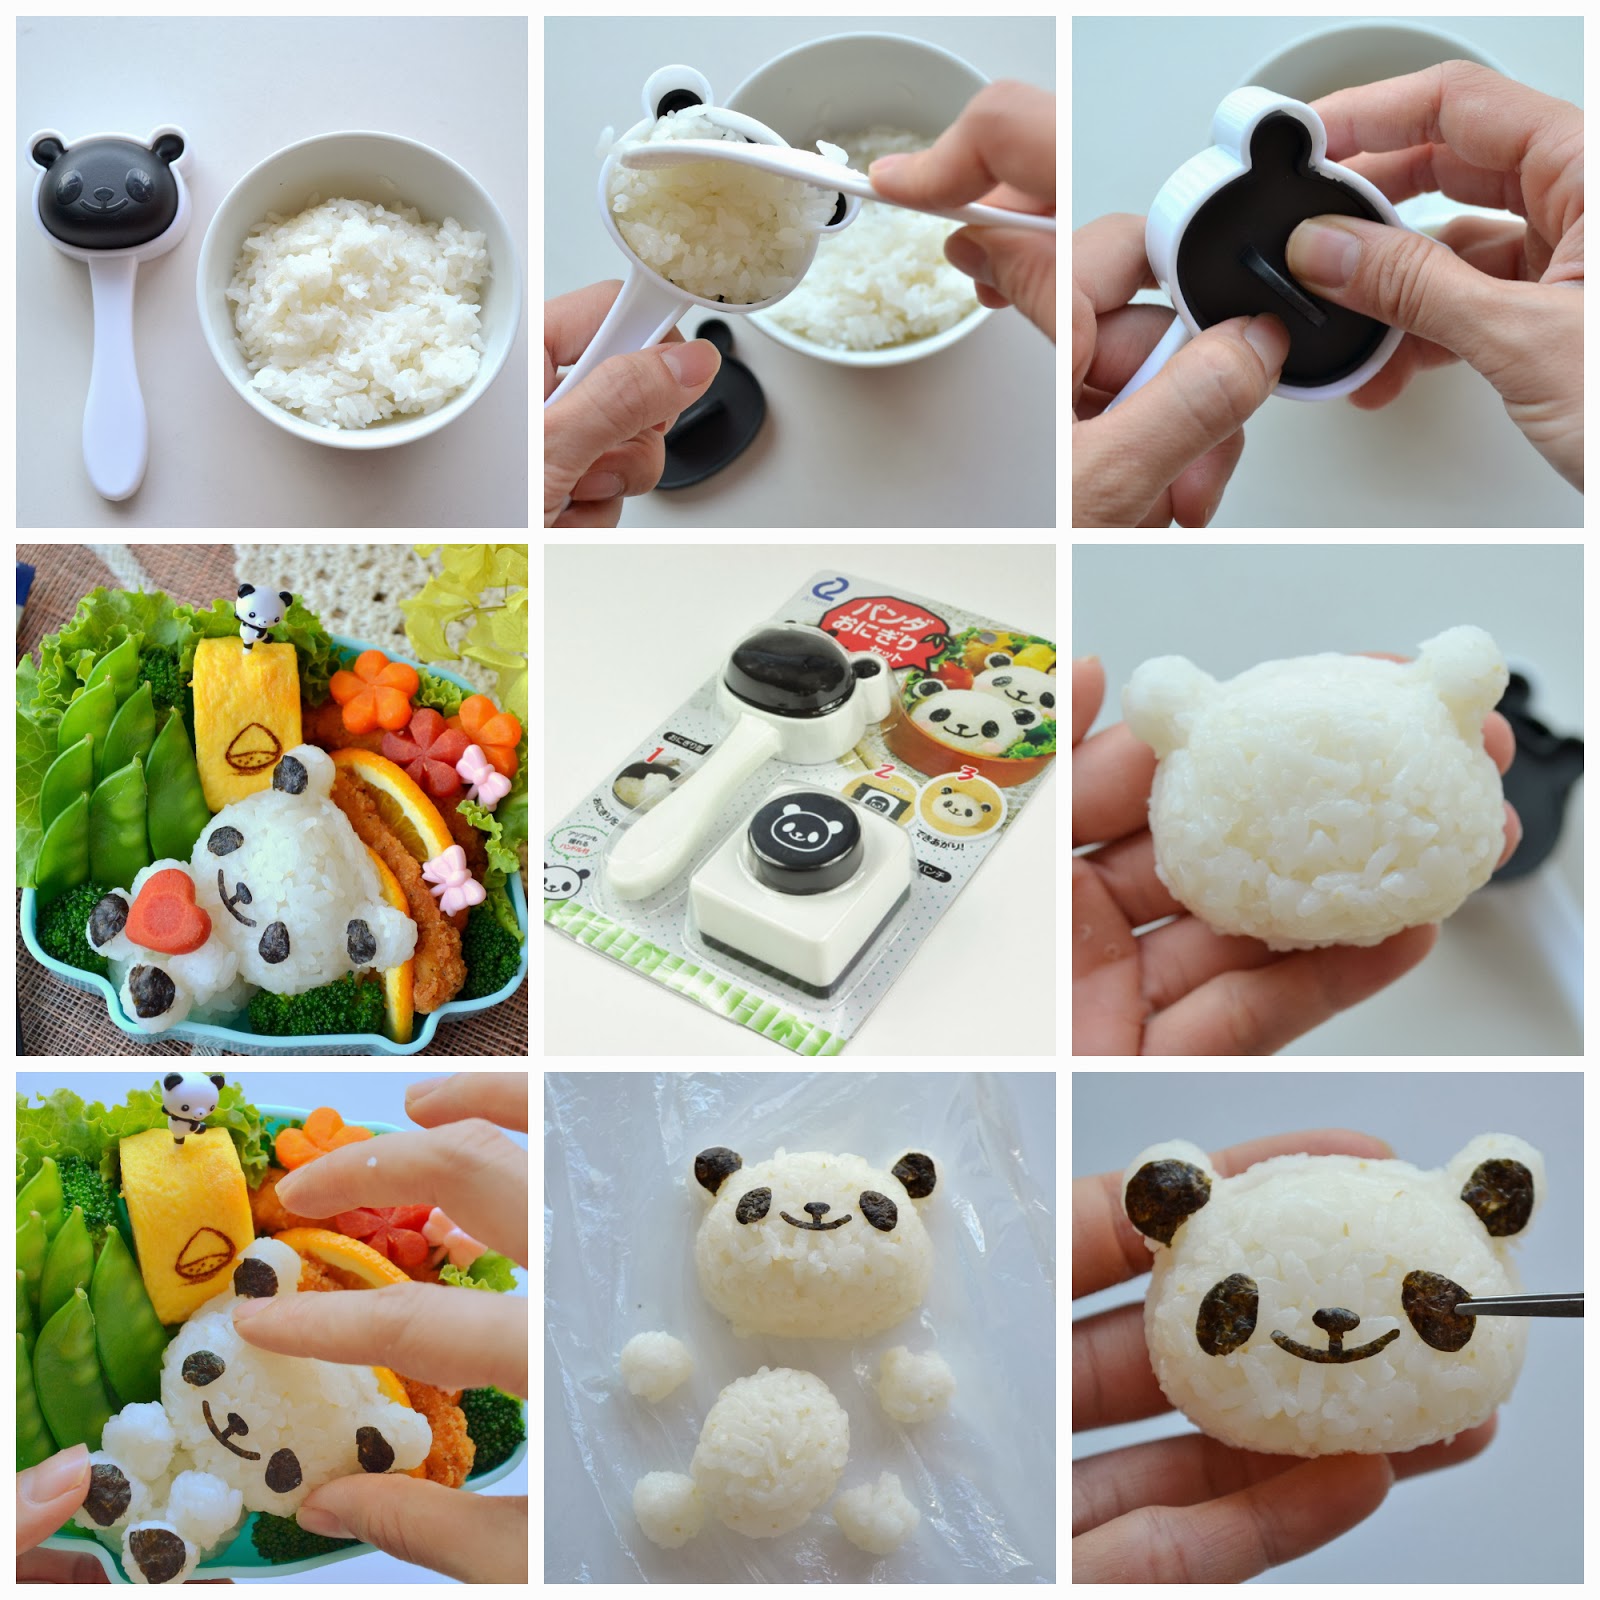 Tutorial for Panda Onigiri Set for Bento - Little Miss Bento